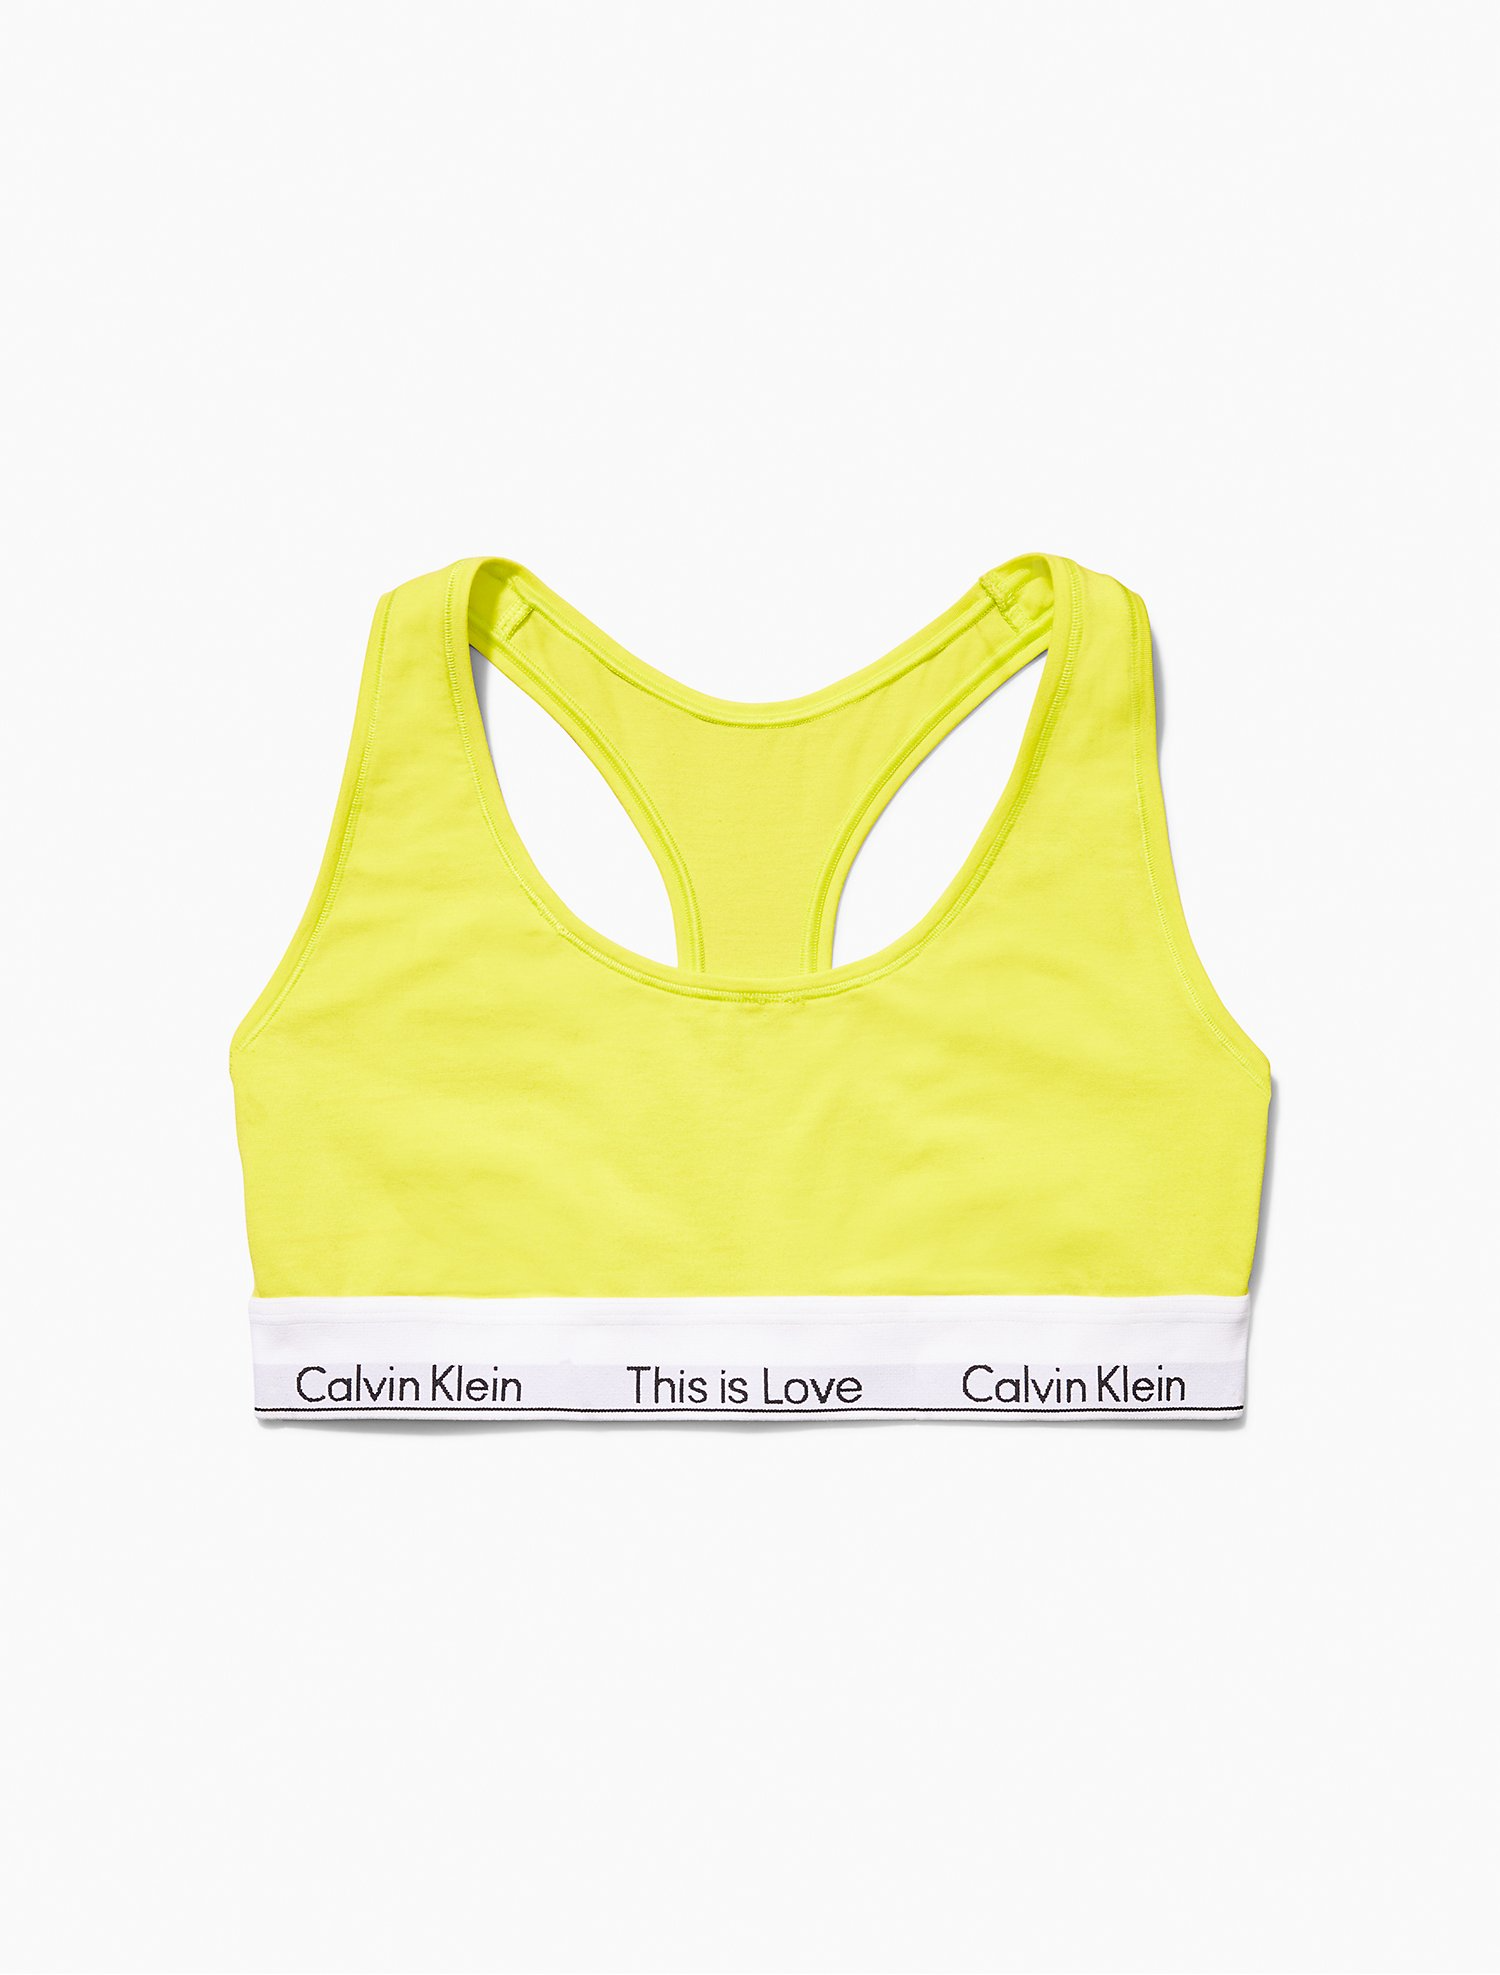 Calvin Klein Pride This Is Love Tonal Unlined Bralette - ShopStyle Bras